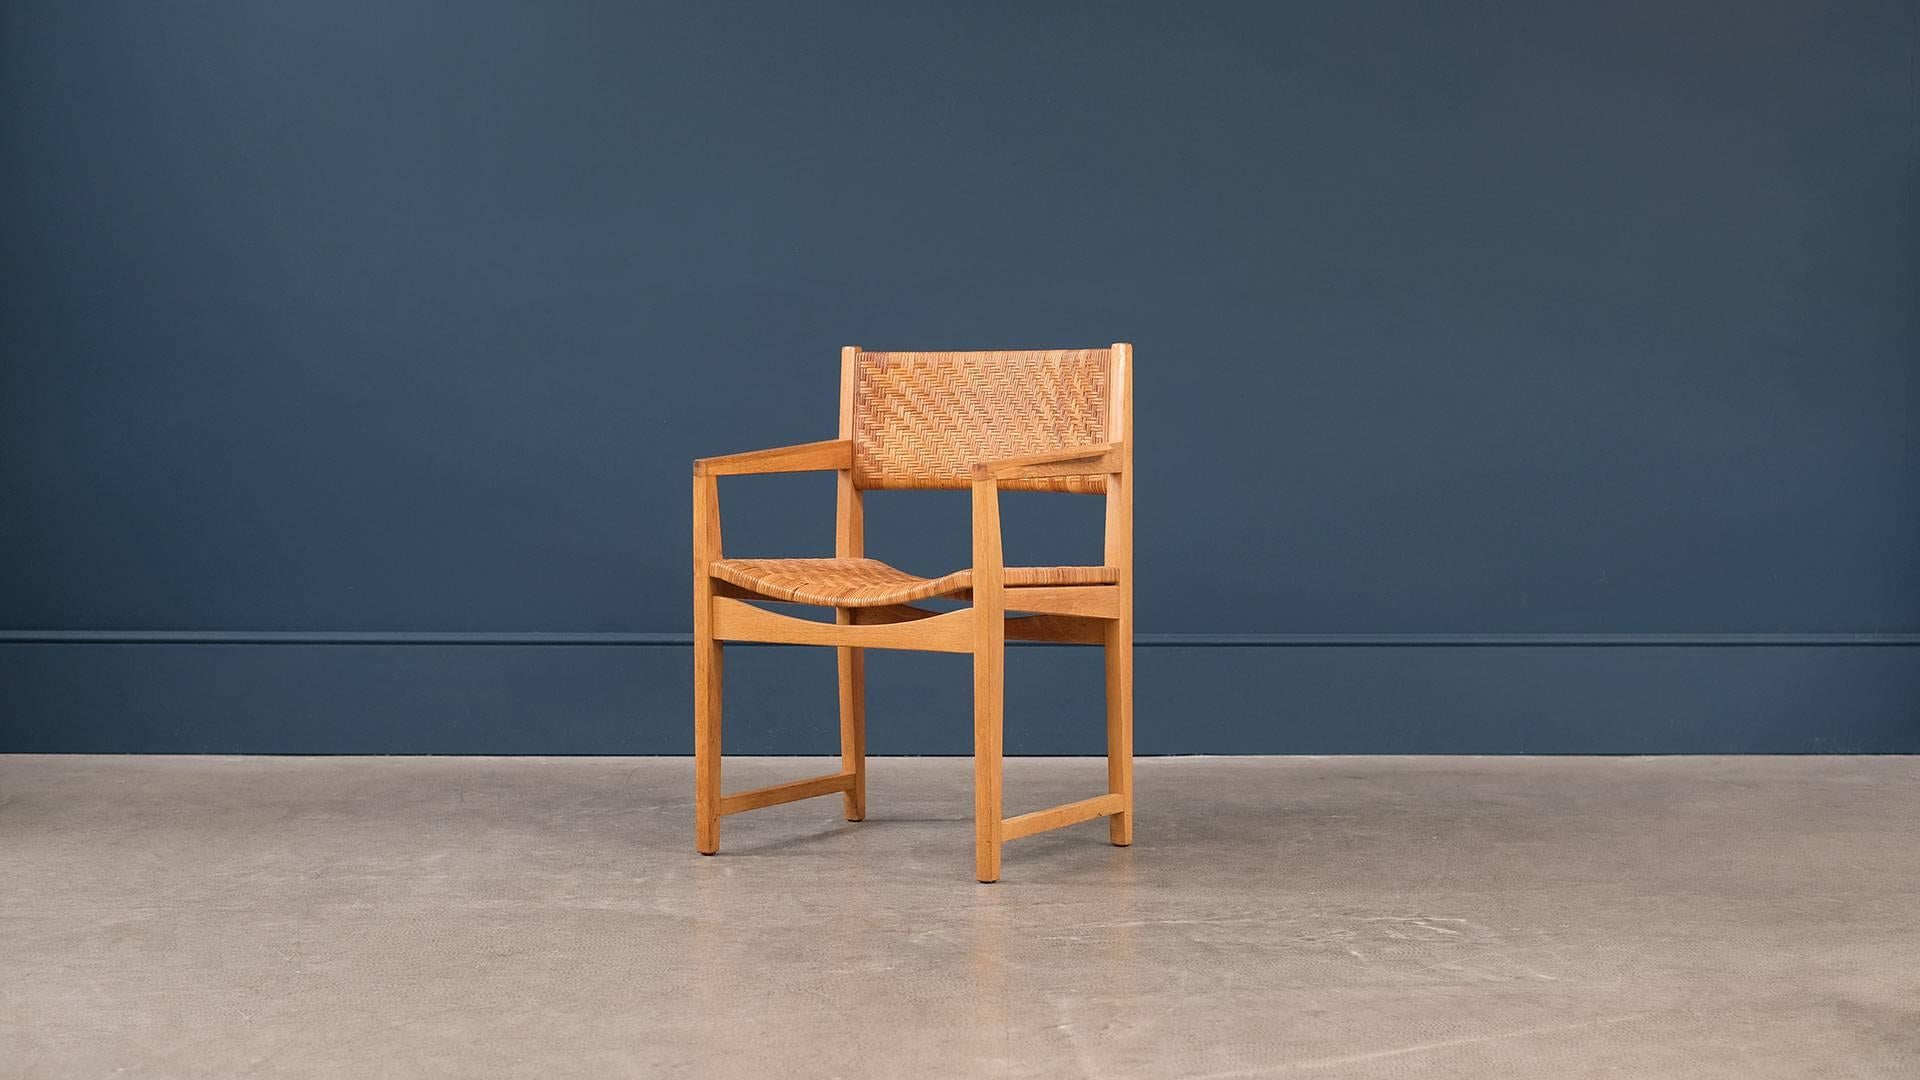 Super elegant chair in solid oak with French cane seat and back designed by Peter Hvidt & Orla Mølgaard-Nielsen for Soborg, Denmark.